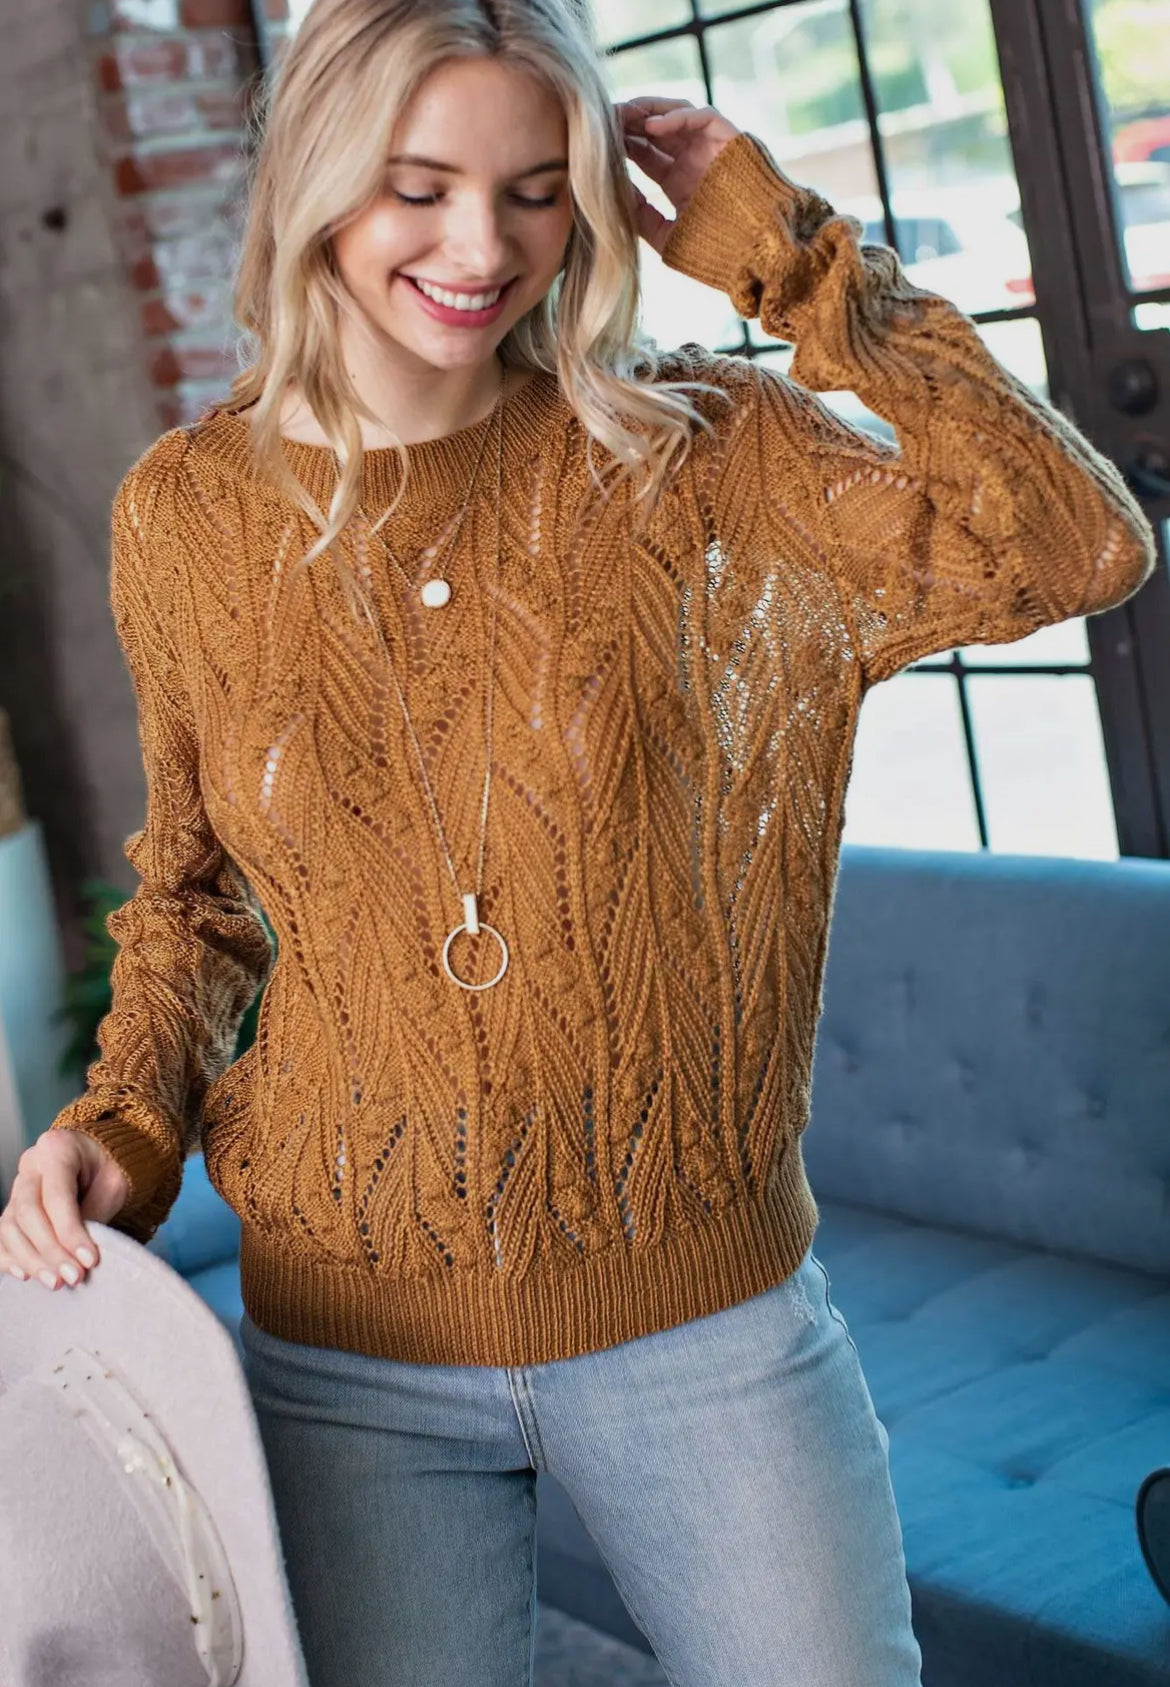 Plus Camel knit sweater